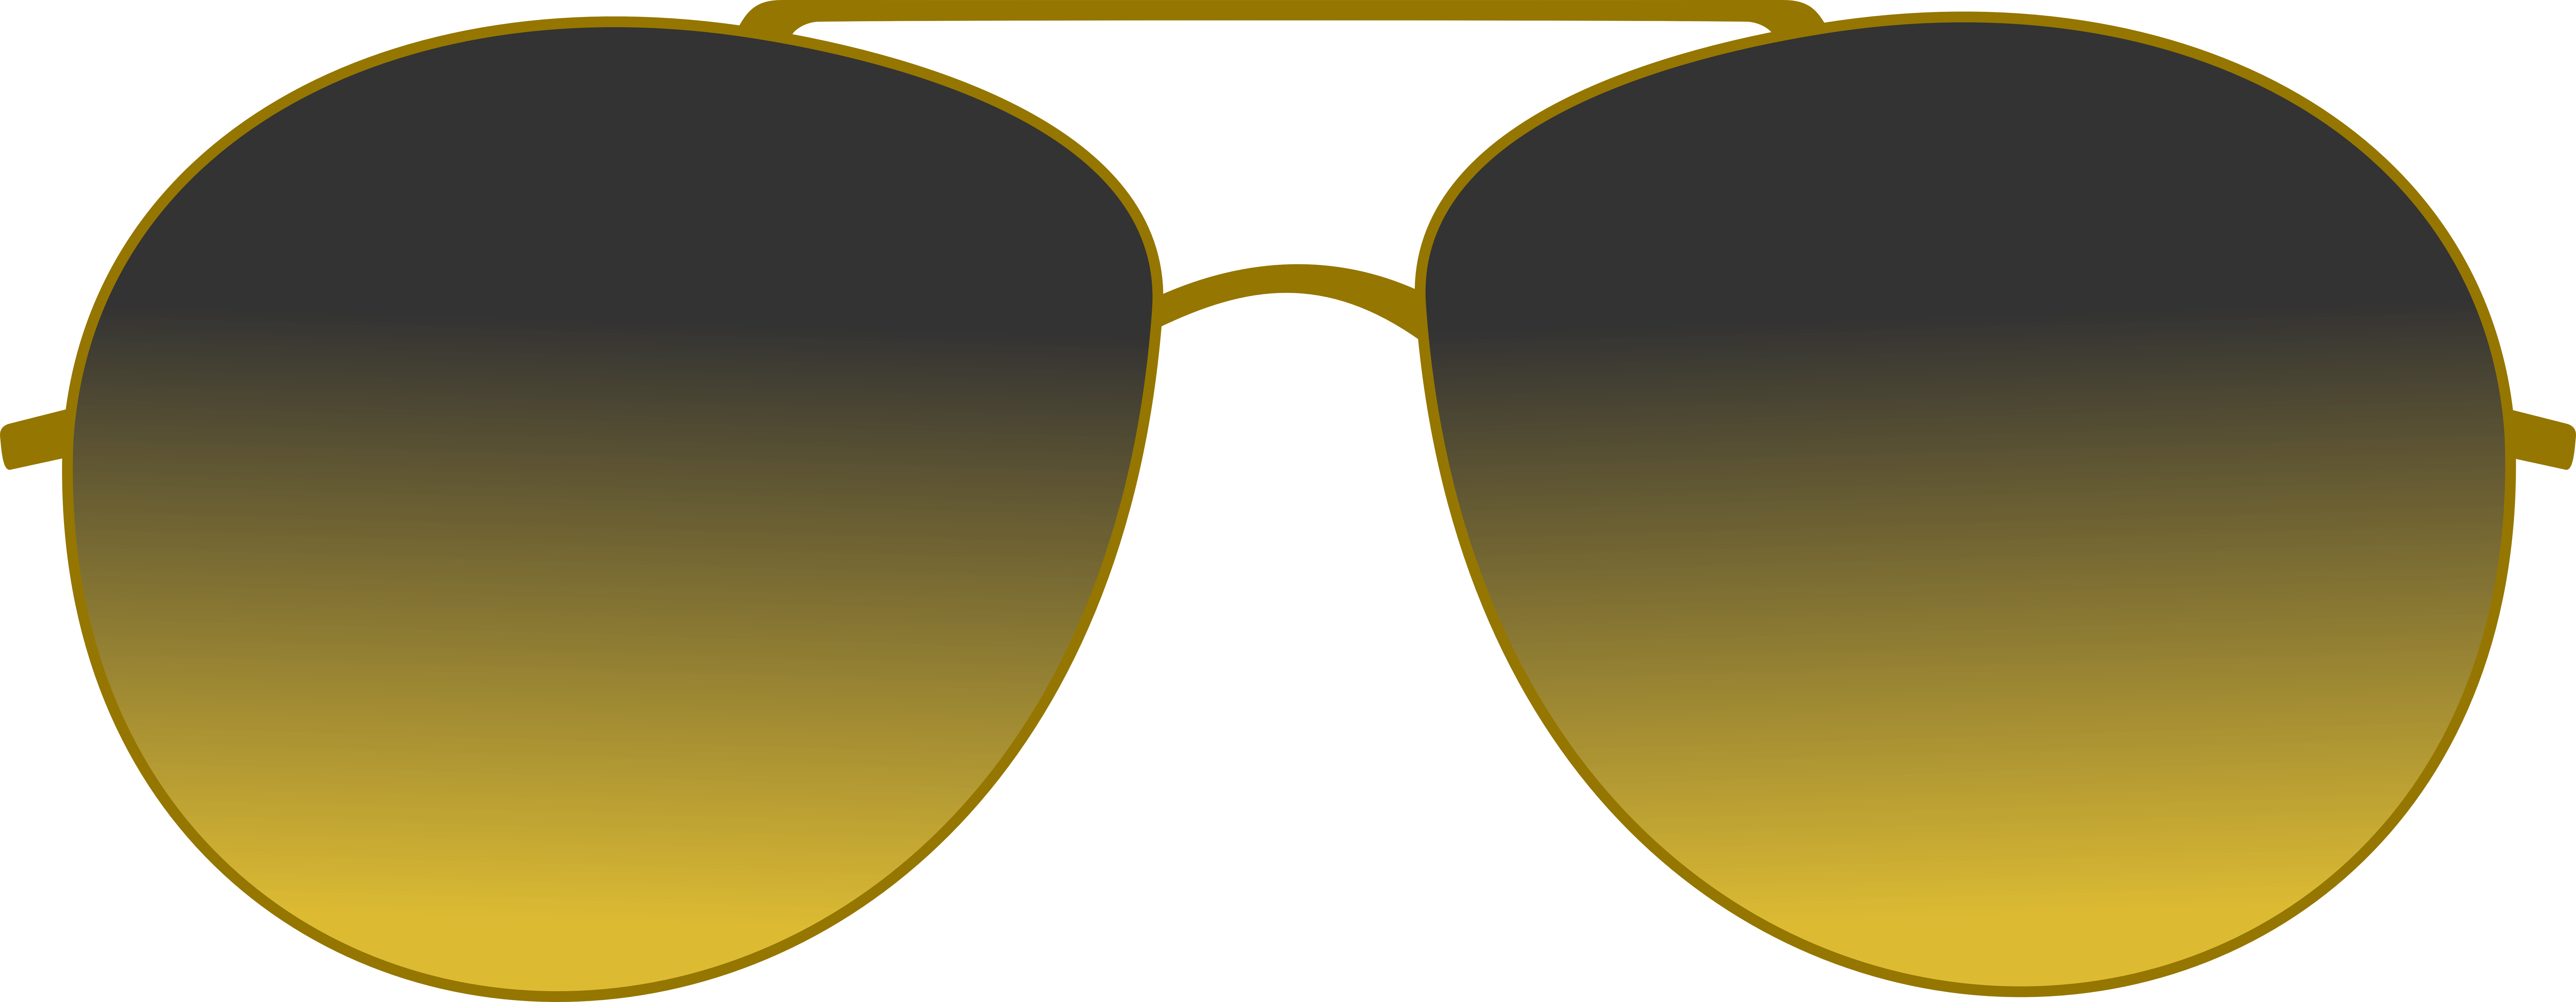 Aviator sunglasses Clip art